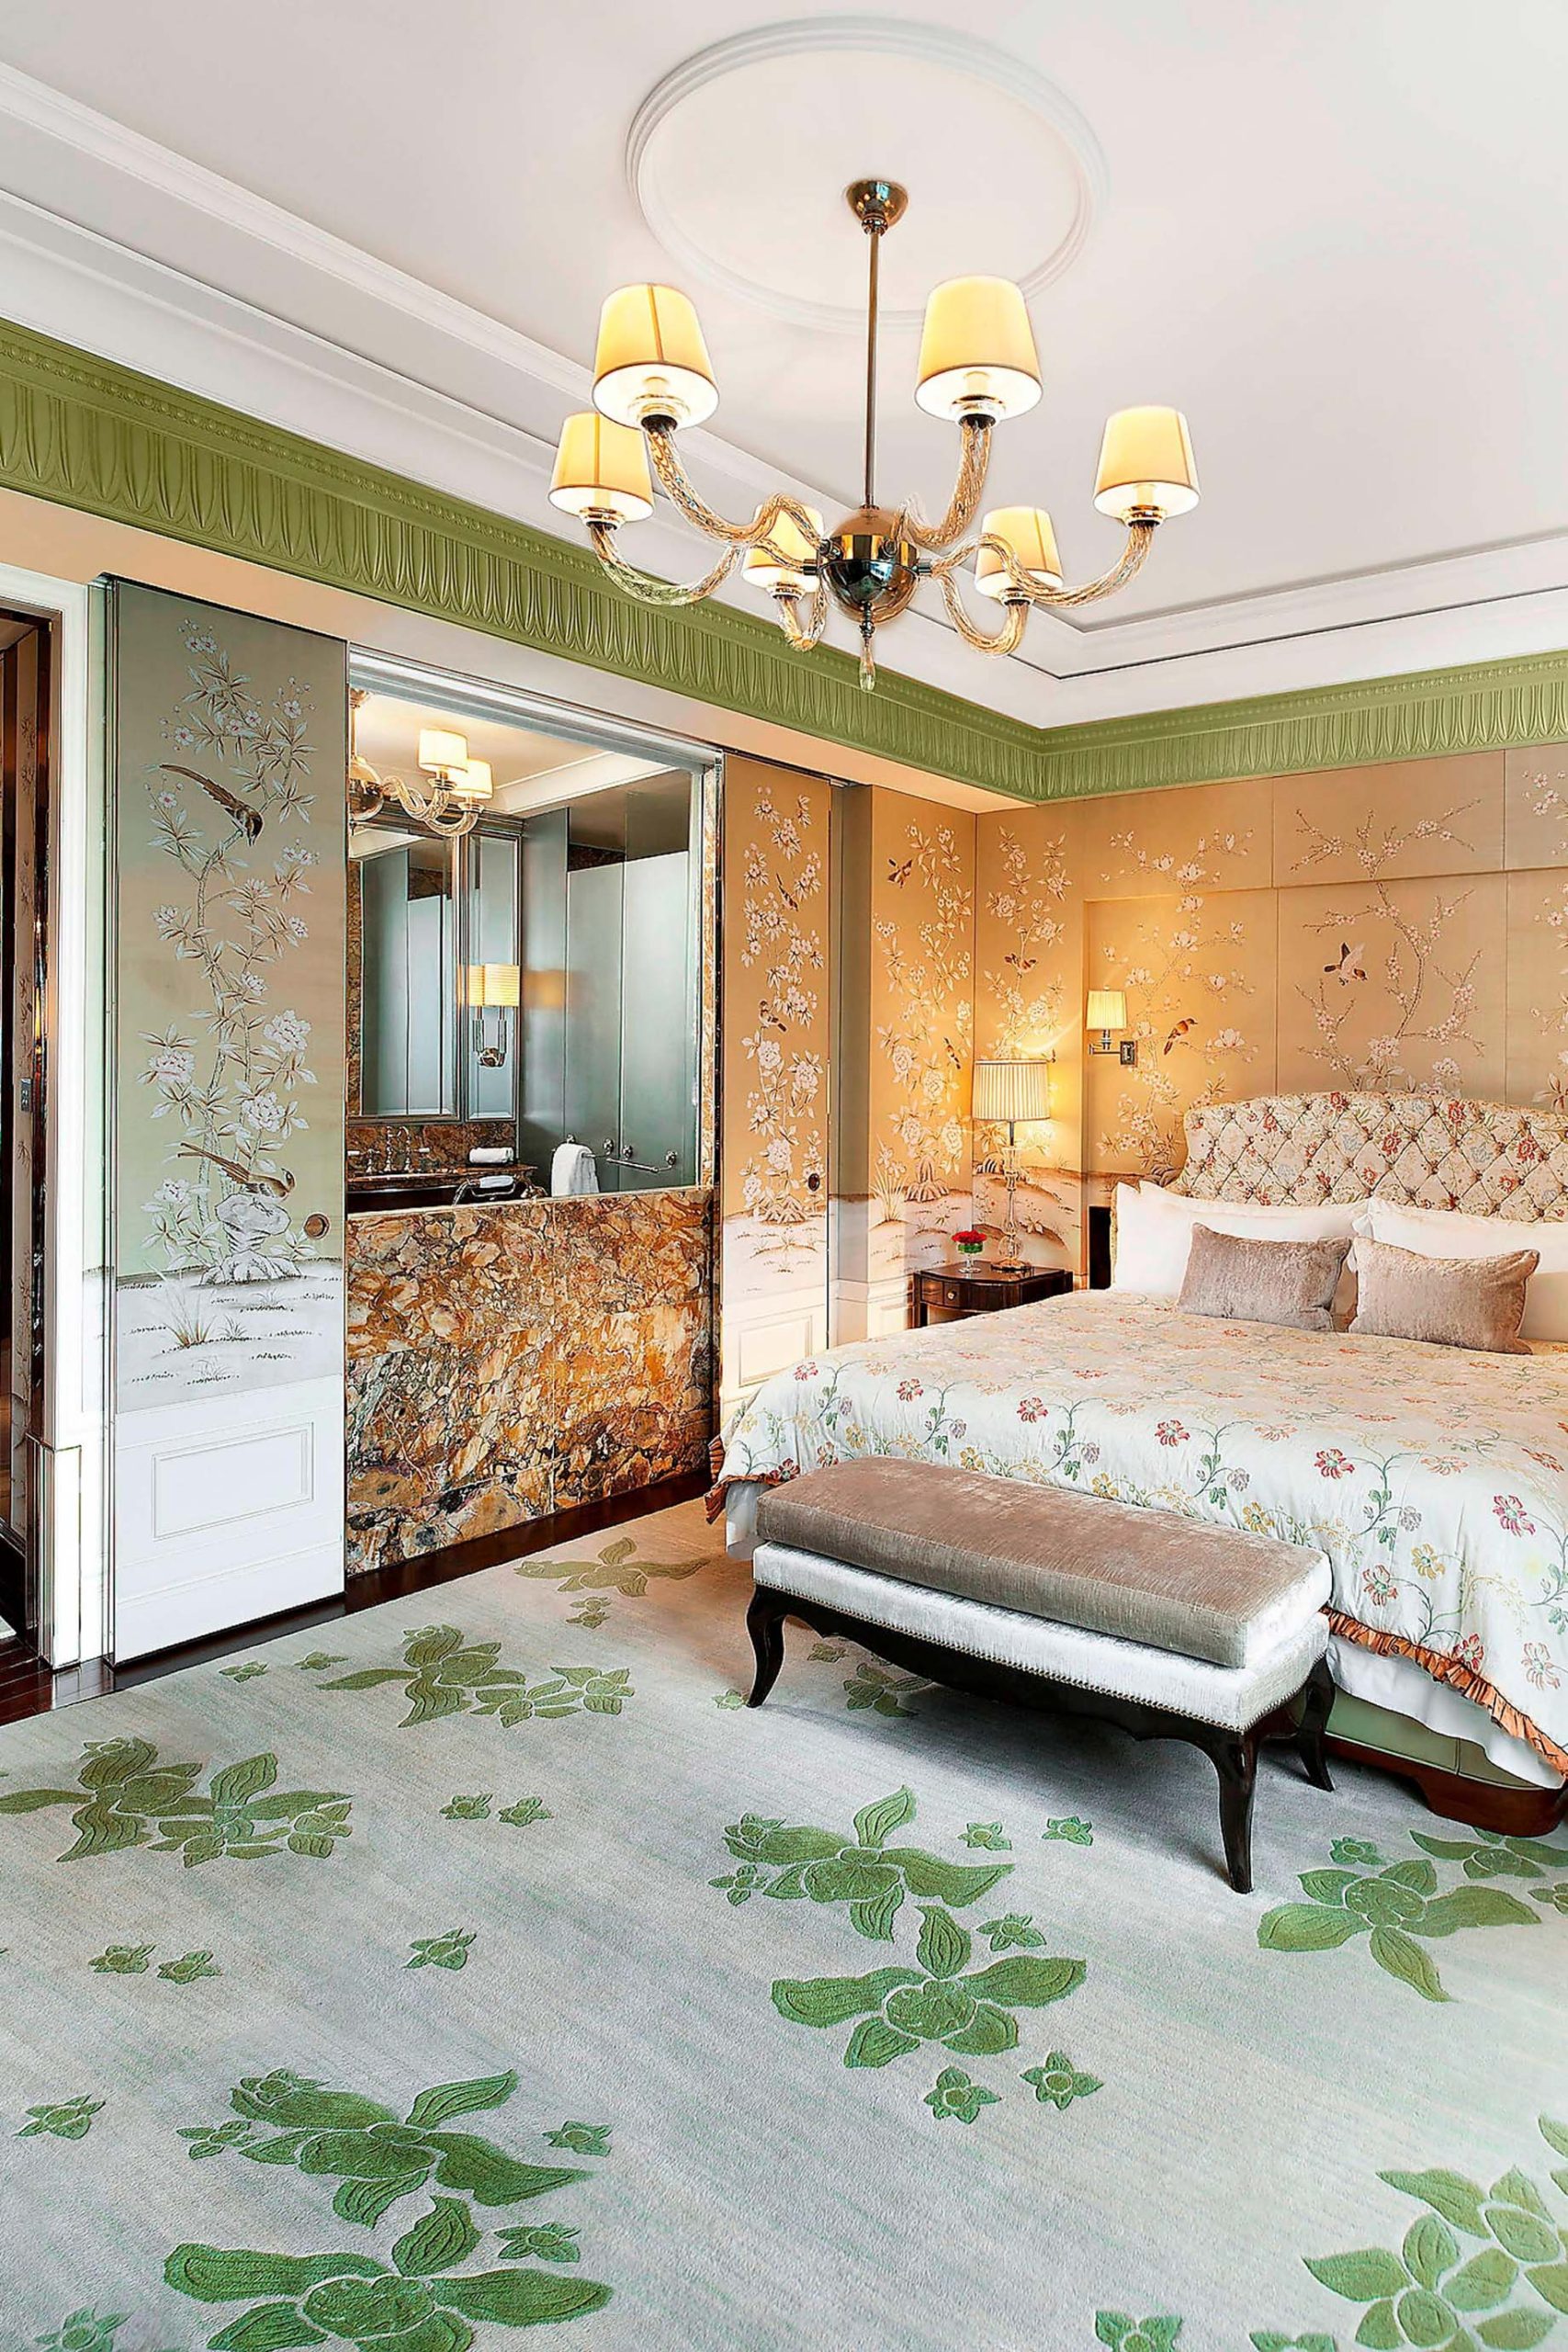 The St. Regis Singapore Hotel – Singapore – King Cole Suite Bedroom